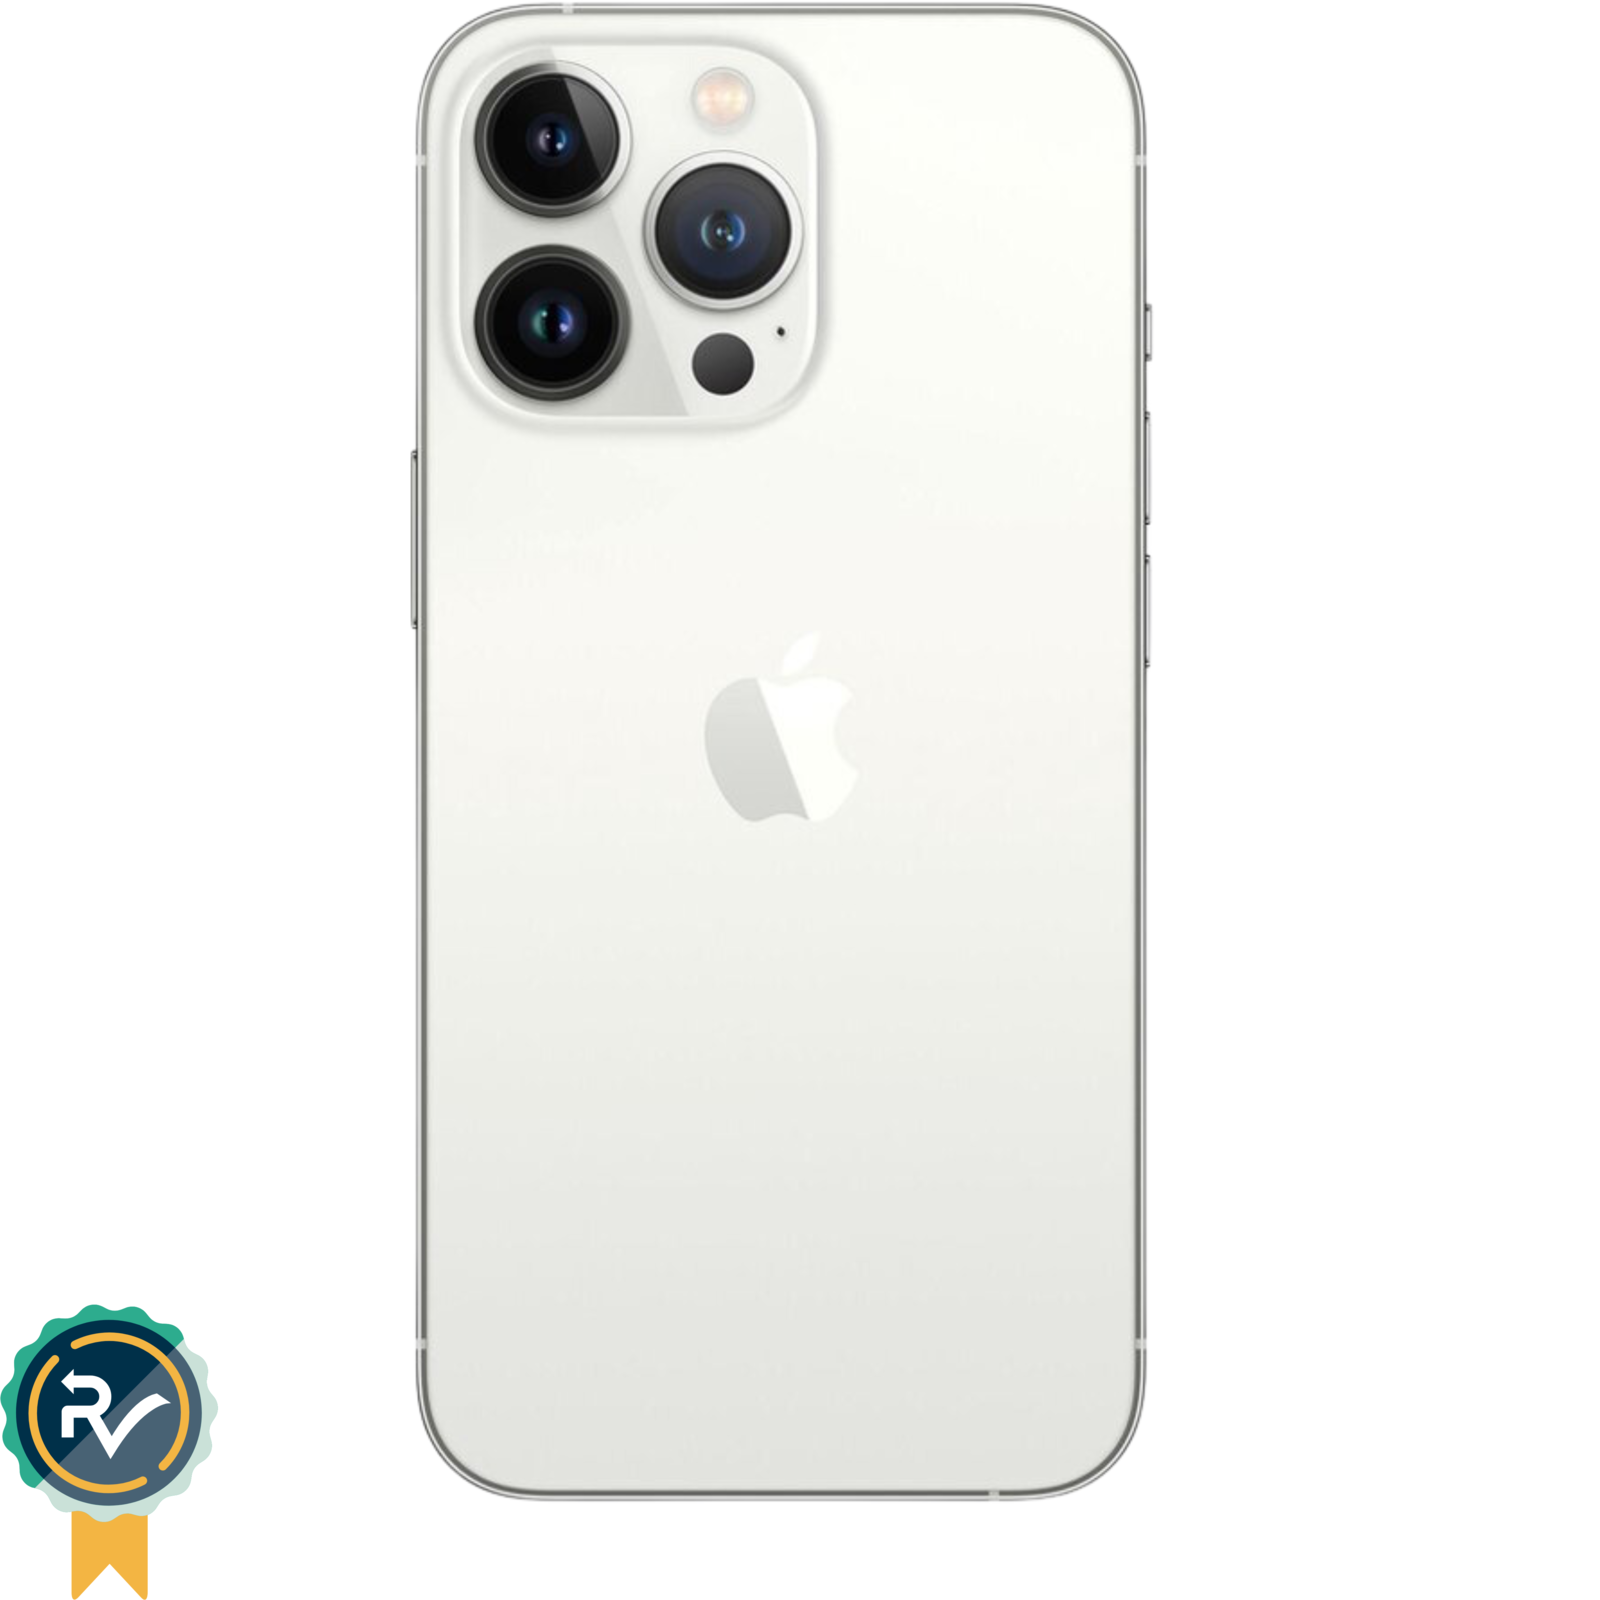 Apple iPhone 13 Pro 256GB Zilver